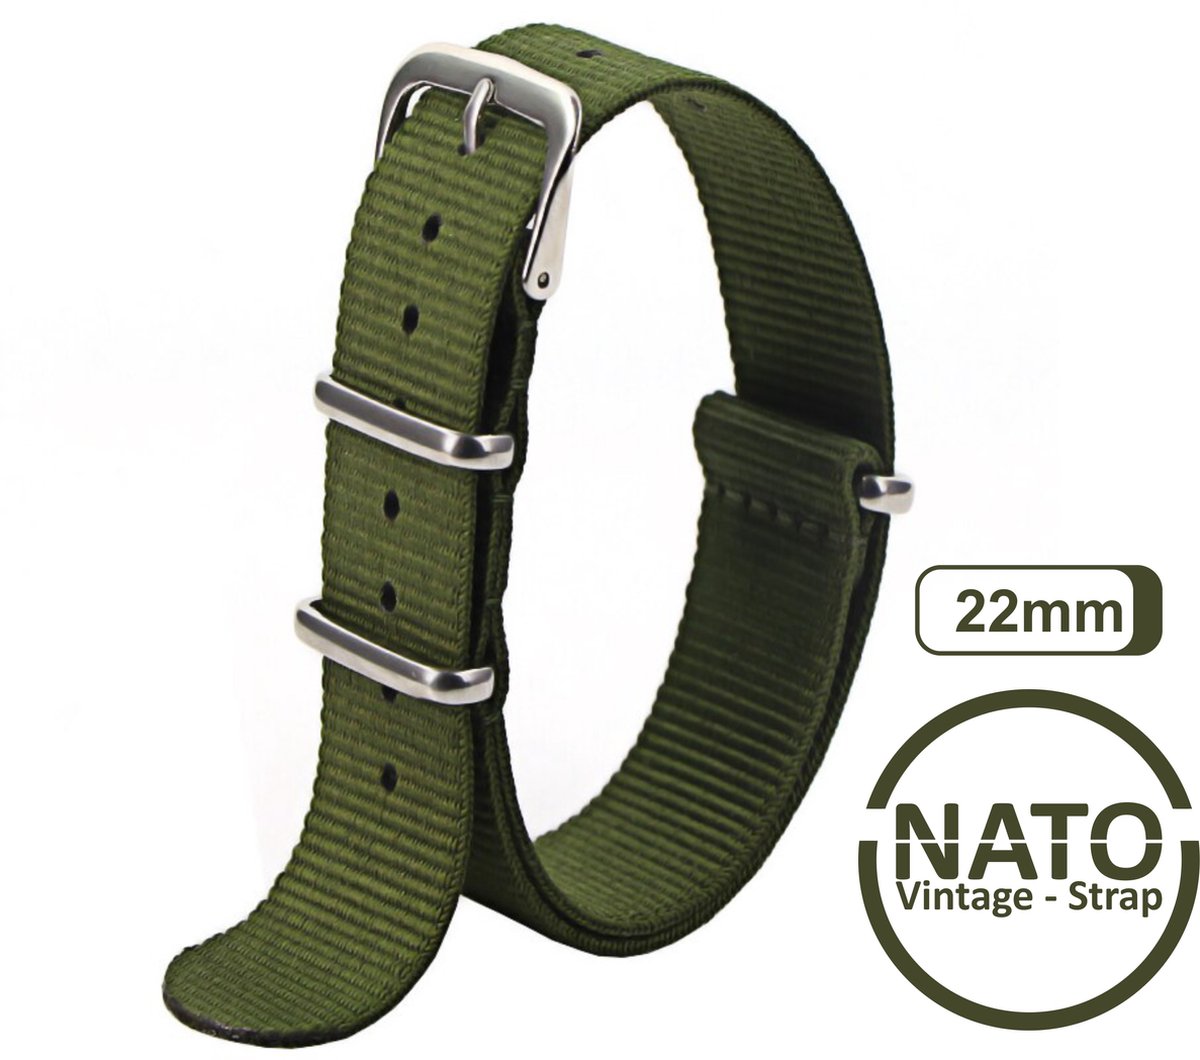 22mm Nato Strap Leger Groen - Vintage James Bond - Nato Strap collectie - Mannen - Horlogebanden - Legergroen 22 mm bandbreedte voor oa. Seiko Rolex Omega Casio en Citizen